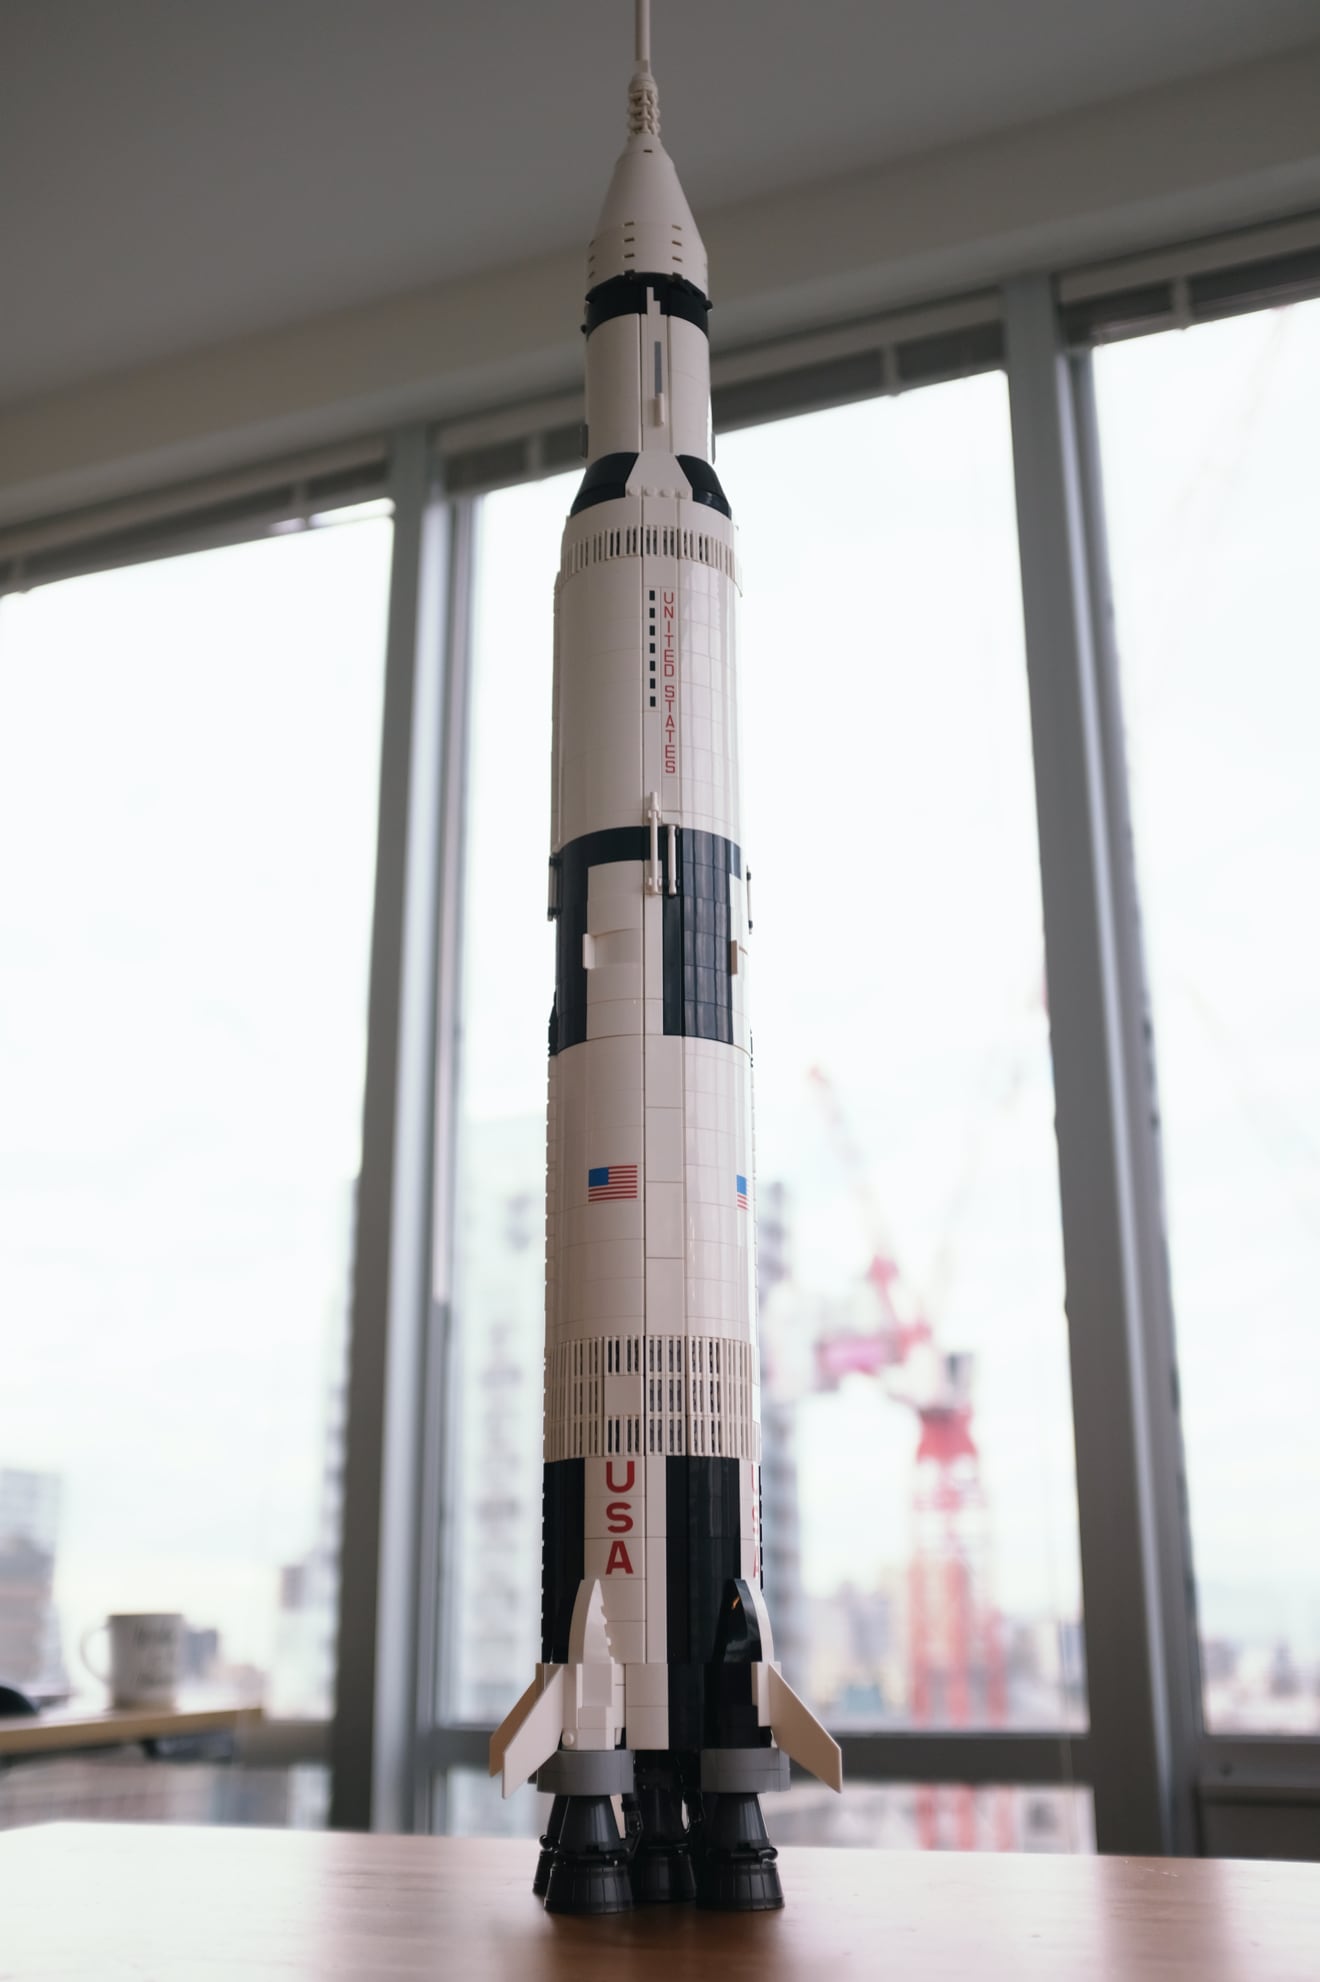 Lego Saturn V rocket